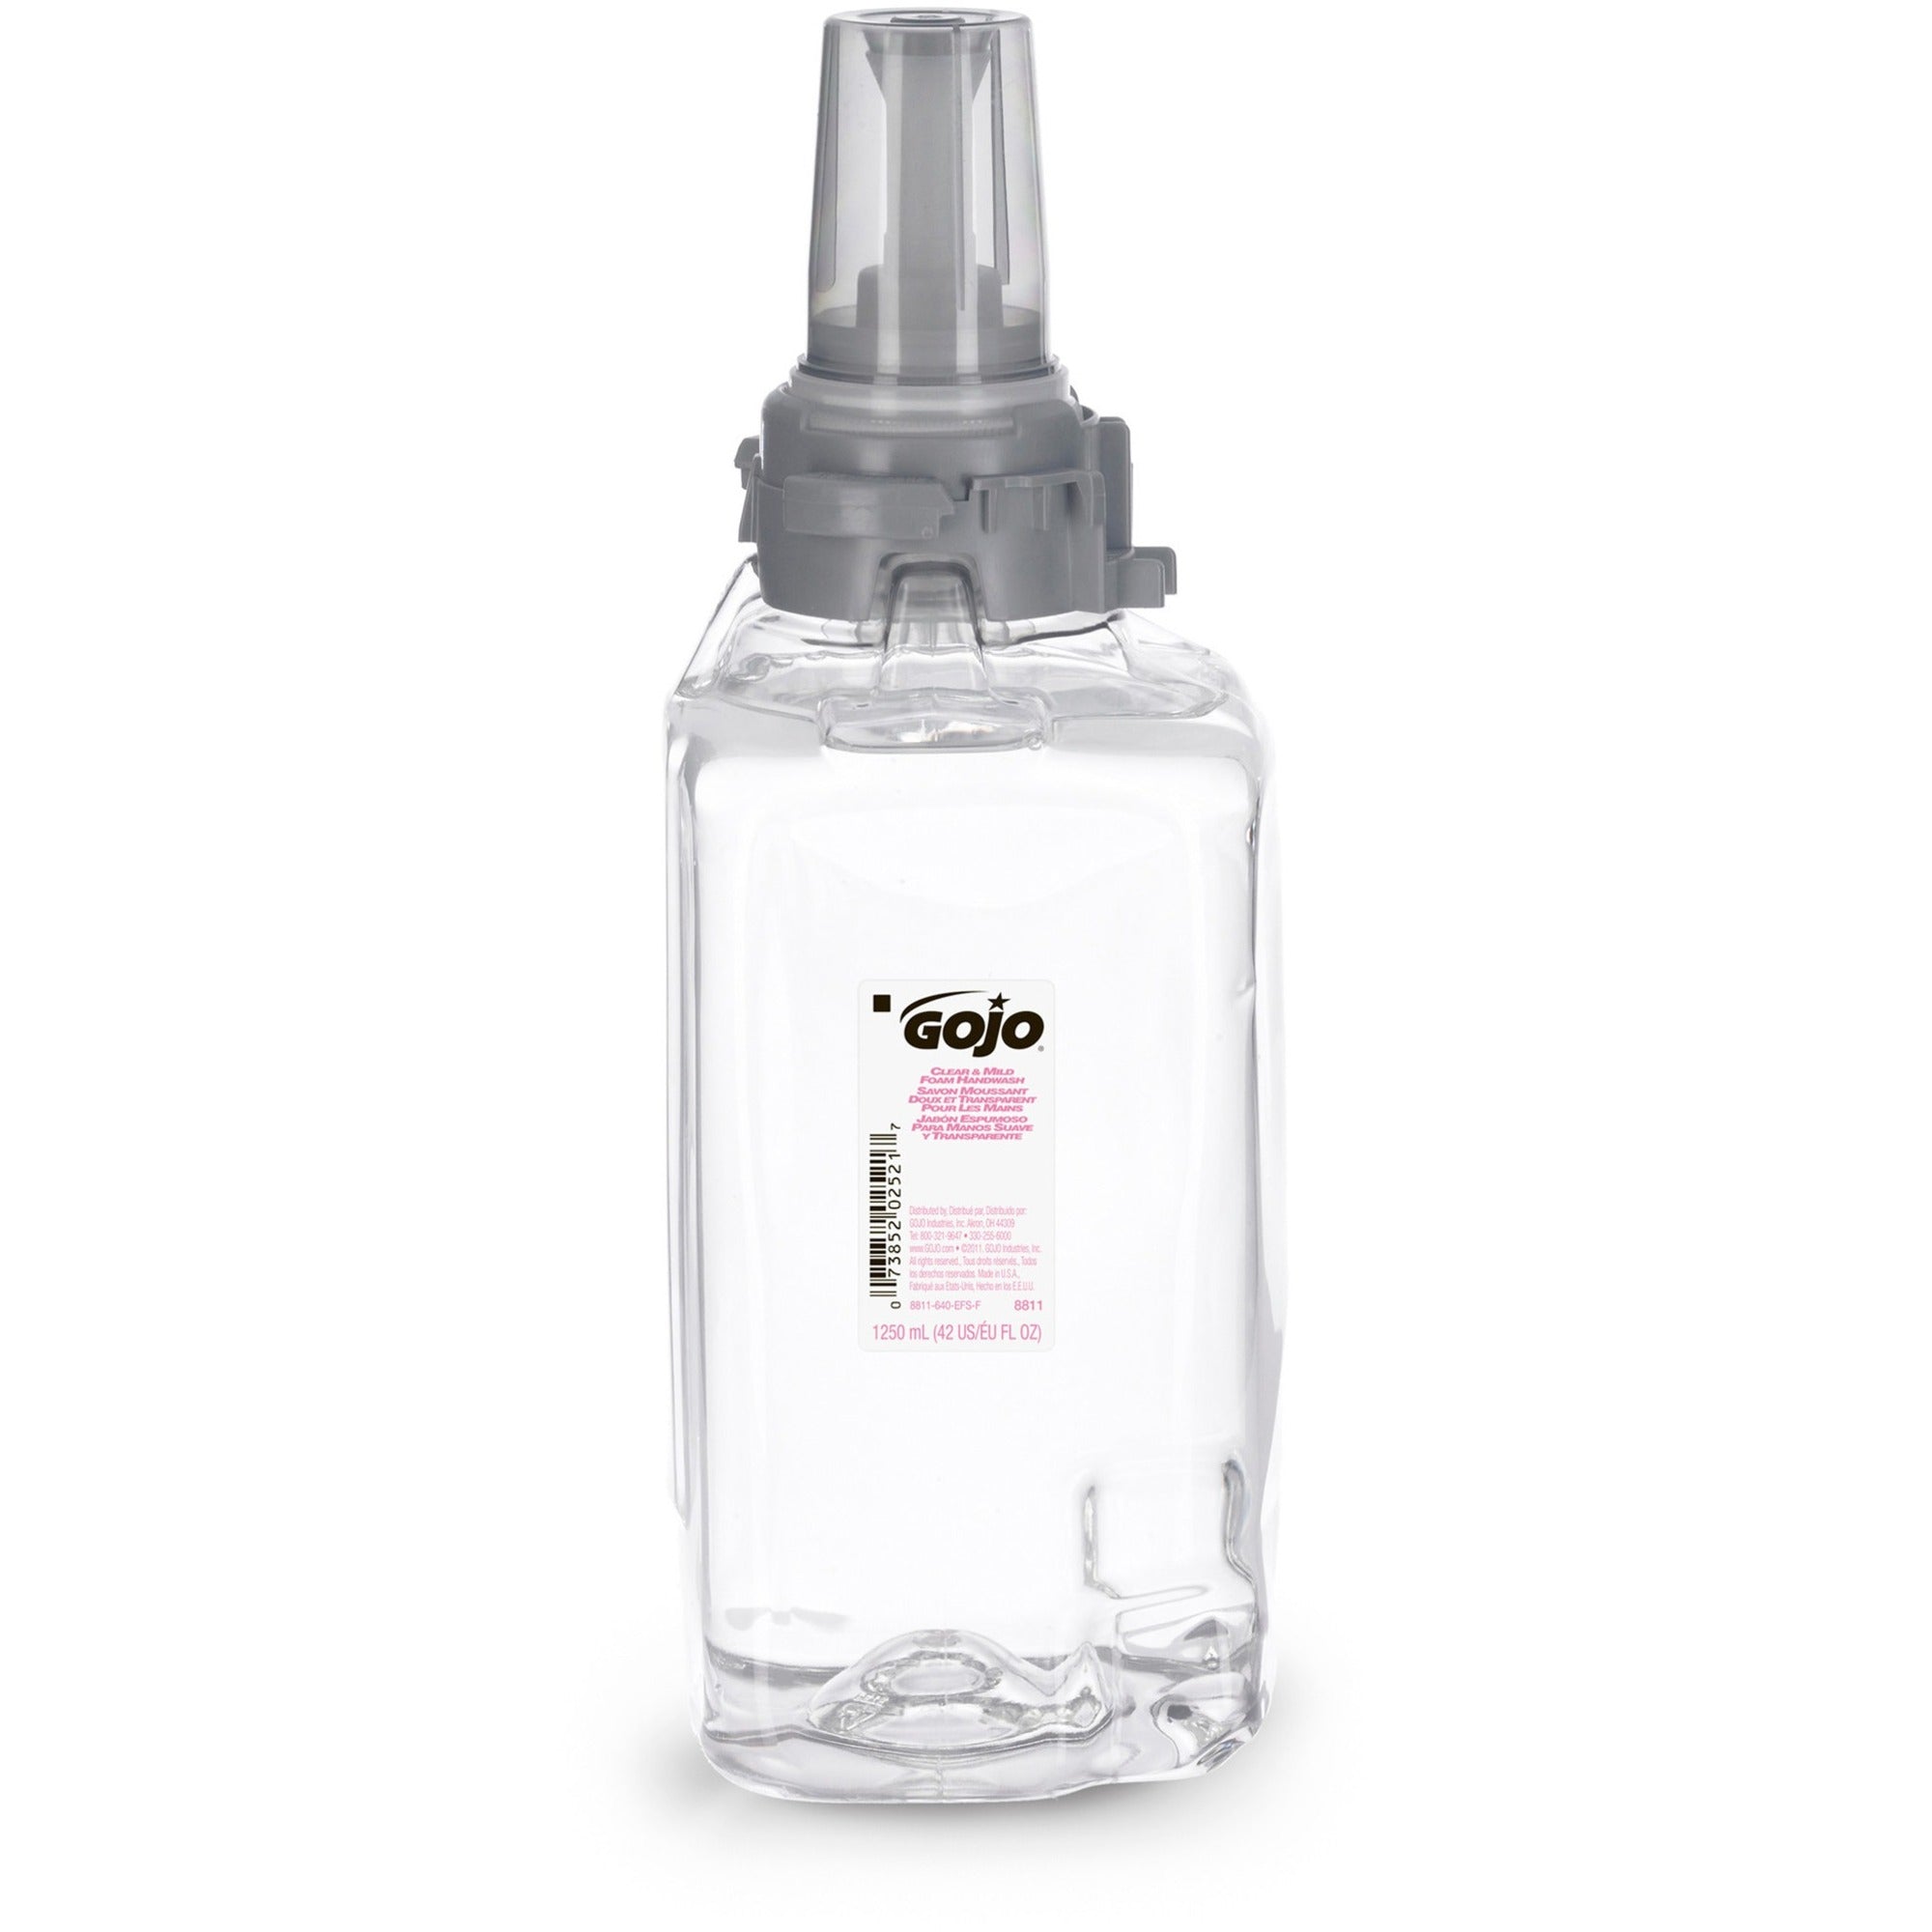 gojo-adx-12-clear-mild-handwash-refill-423-fl-oz-1250-ml-push-pump-dispenser-hand-skin-moisturizing-clear-dye-free-fragrance-free-rich-lather-bio-based-3-carton_goj881103ct - 1